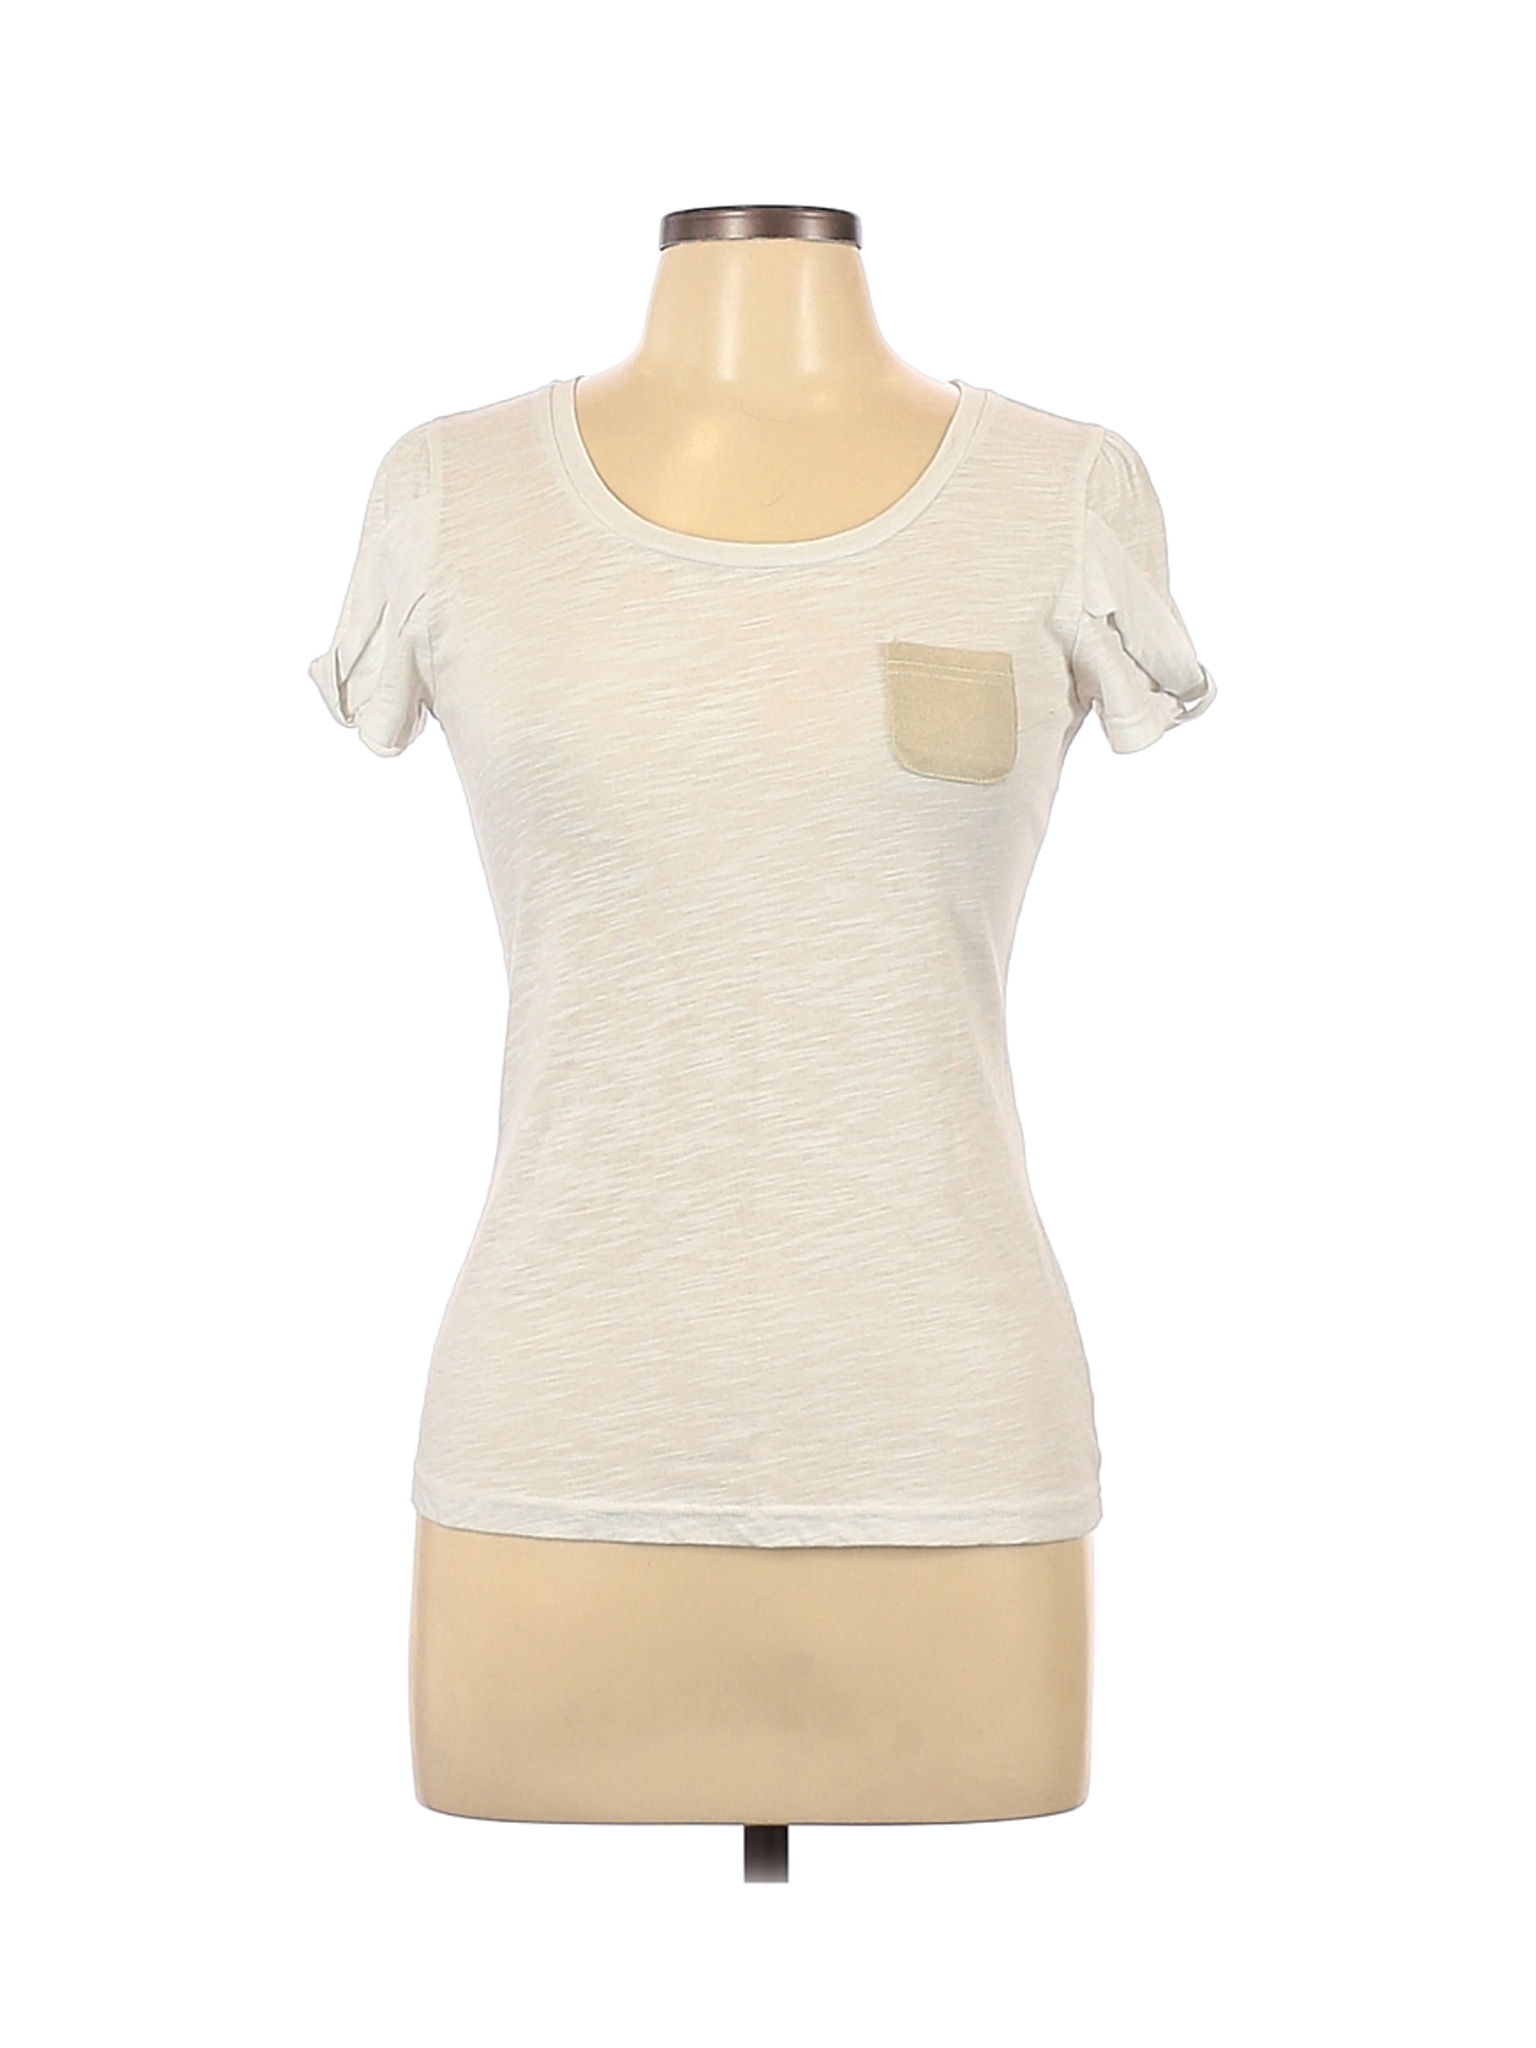 Kitschen Women Ivory Short Sleeve T-Shirt L | eBay